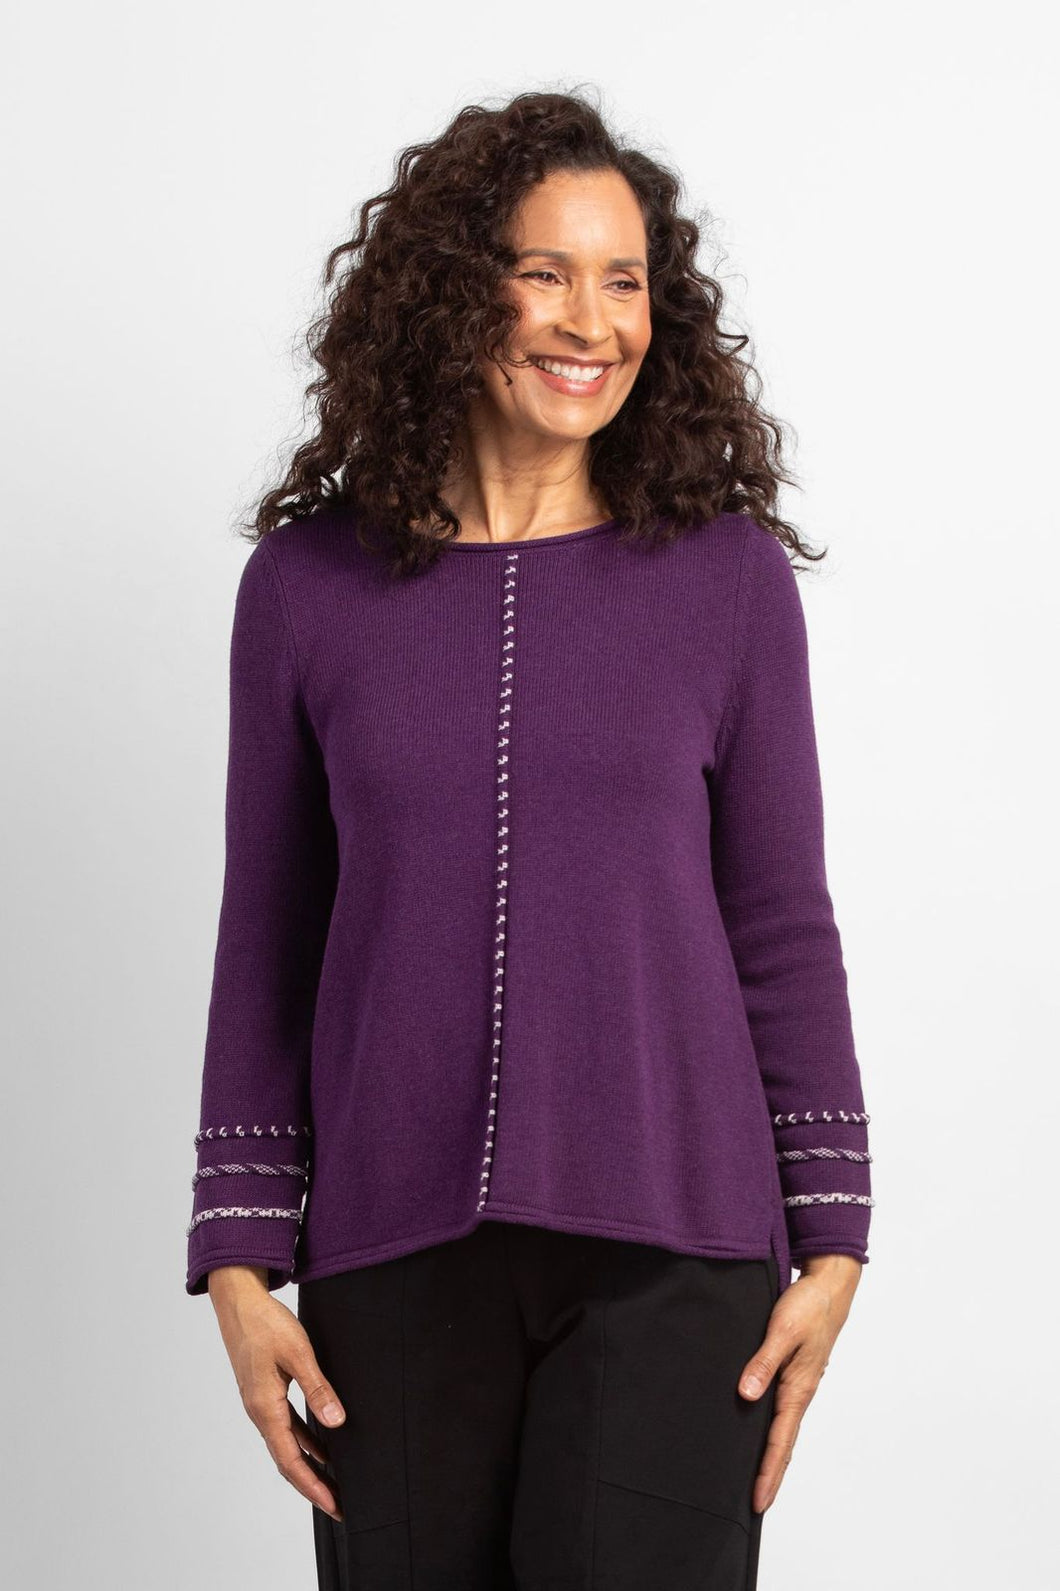 Habitat Damson (Purple) Round Neck Sweater with Trim- 100% Cotton